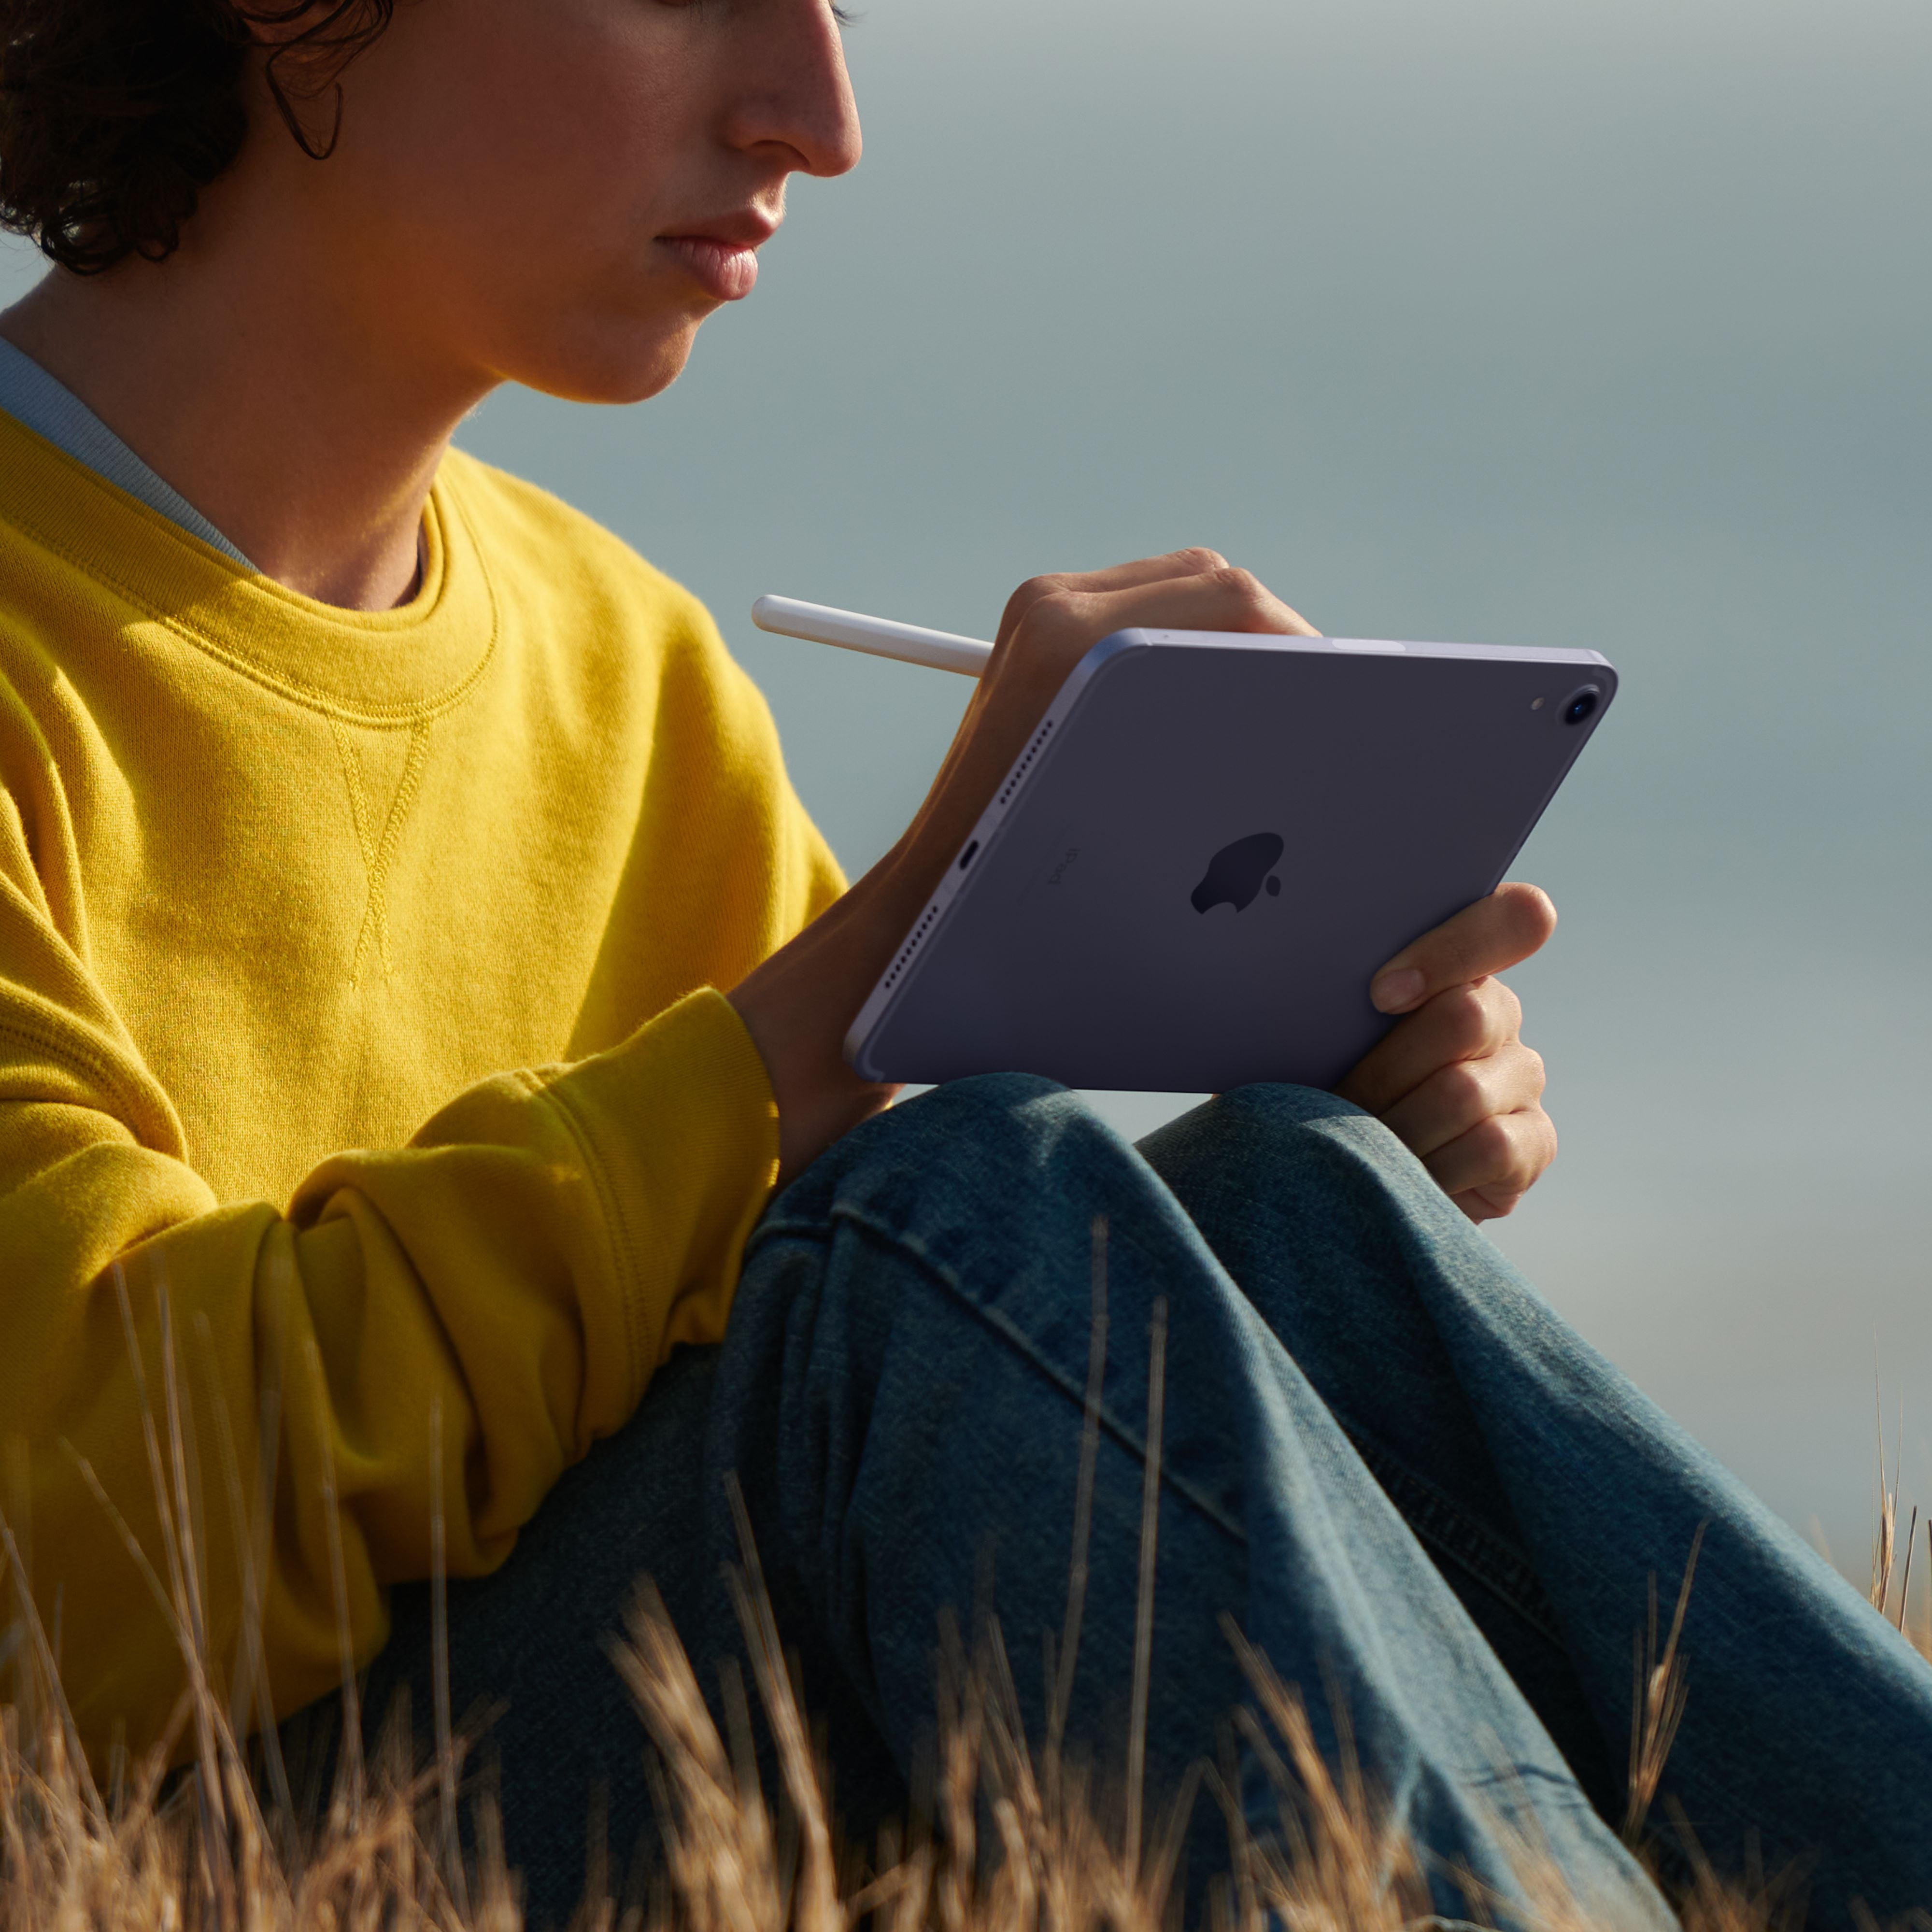 2021 Apple iPad Mini Wi-Fi + Cellular 64GB - Space Gray (6th Generation)